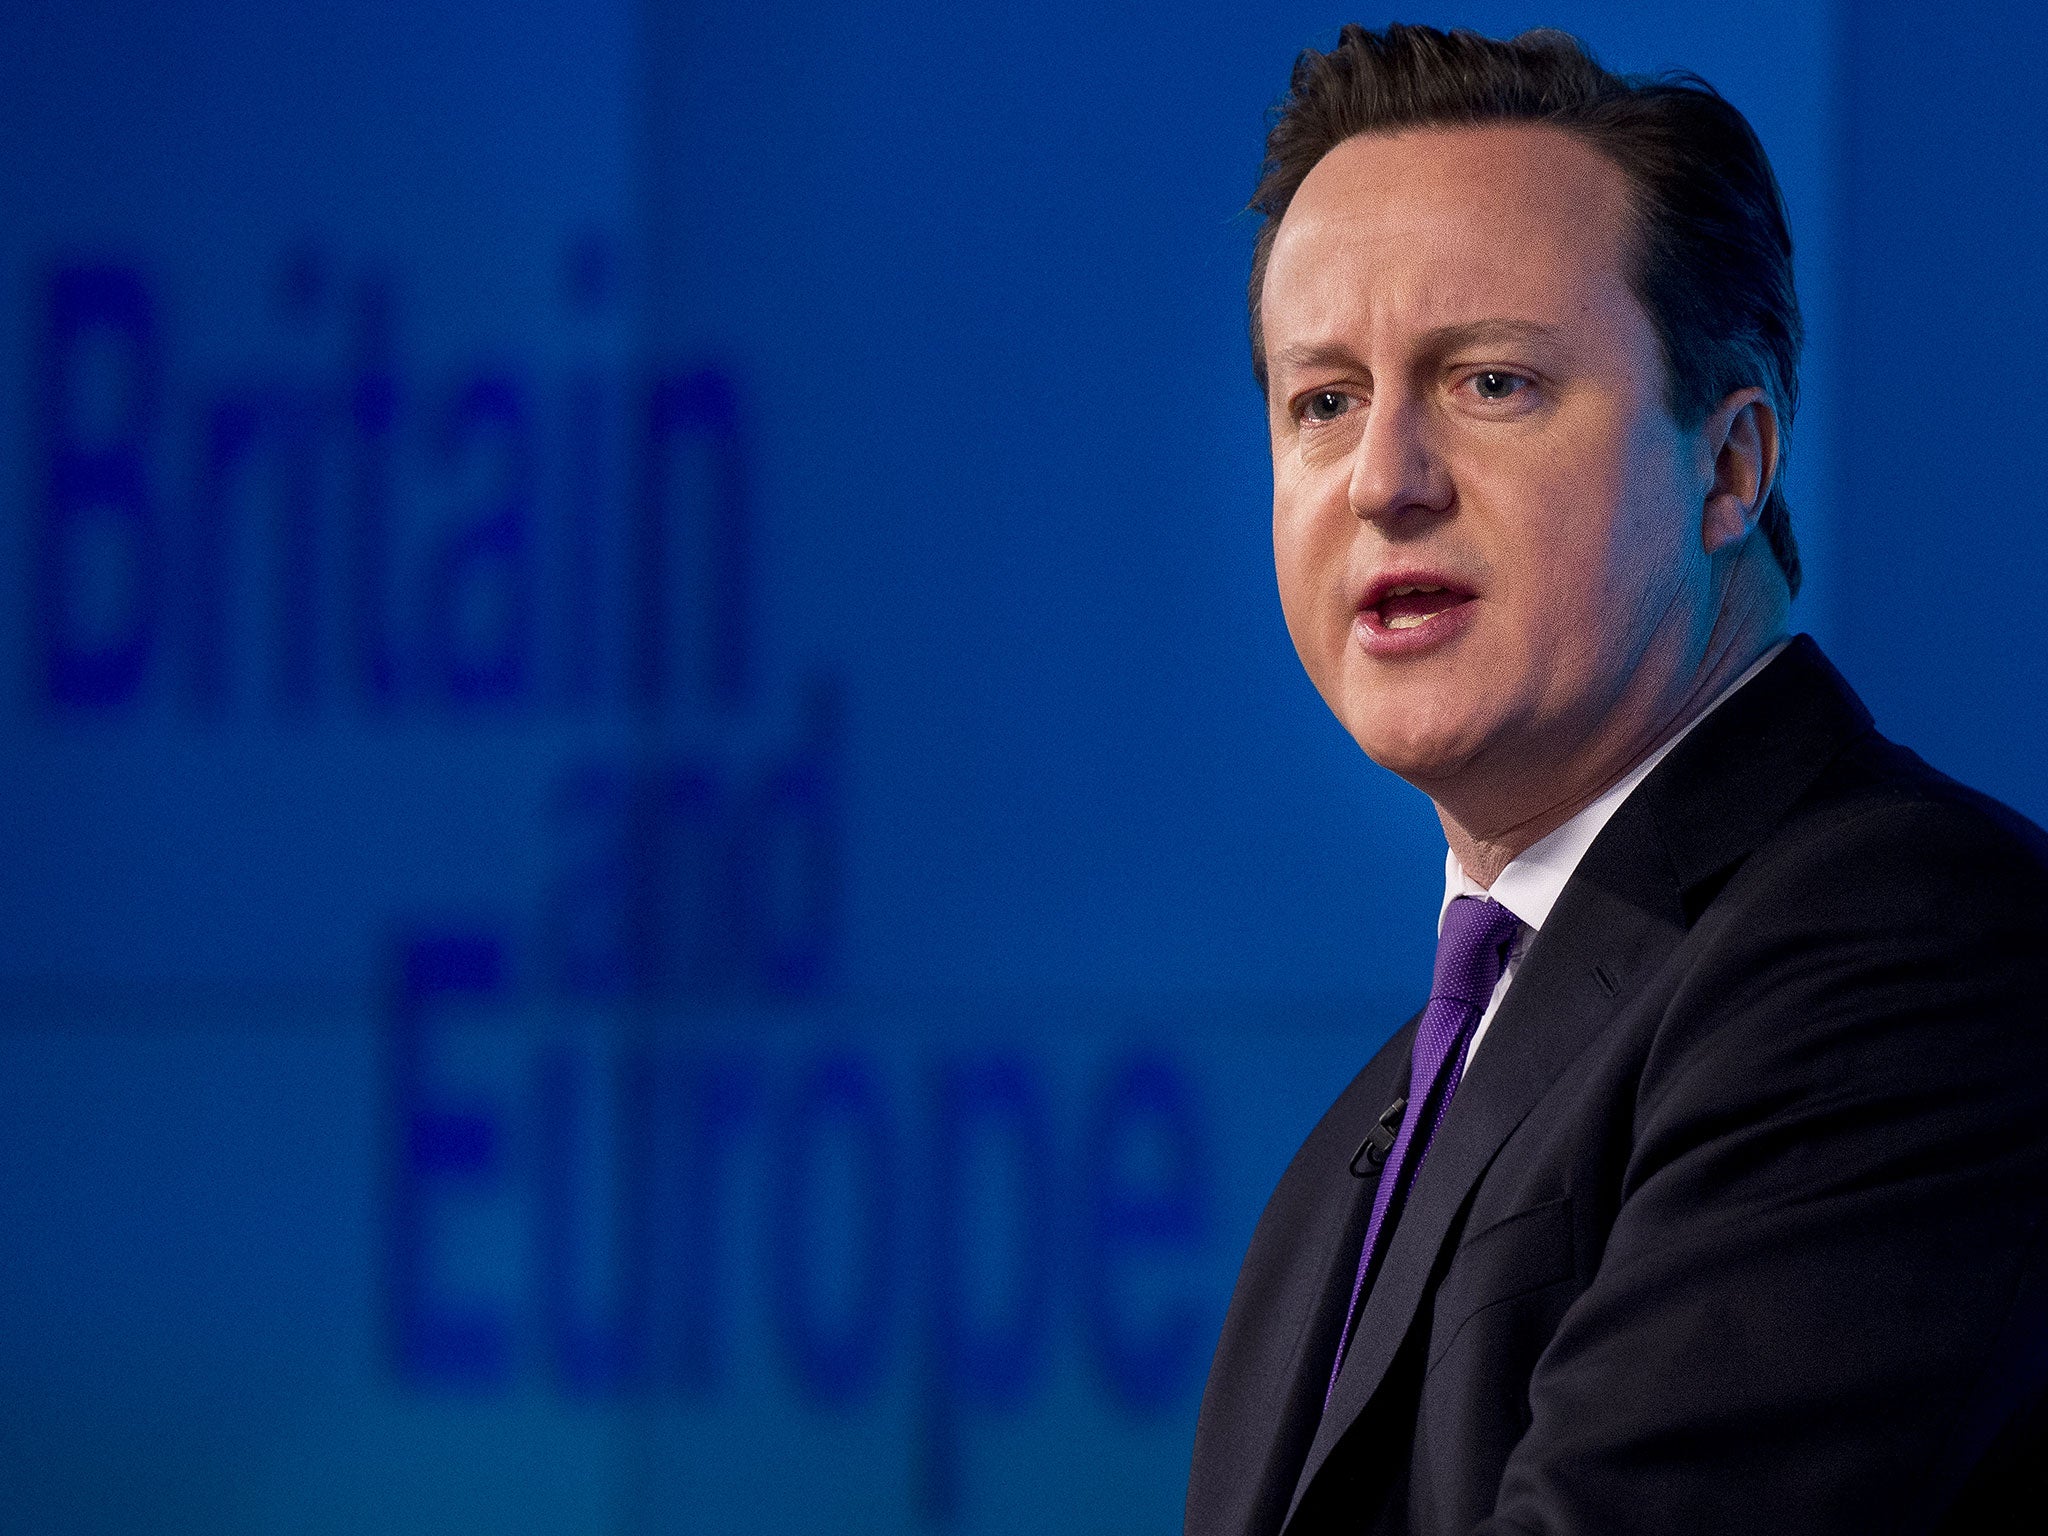 David Cameron faces crunch talks today